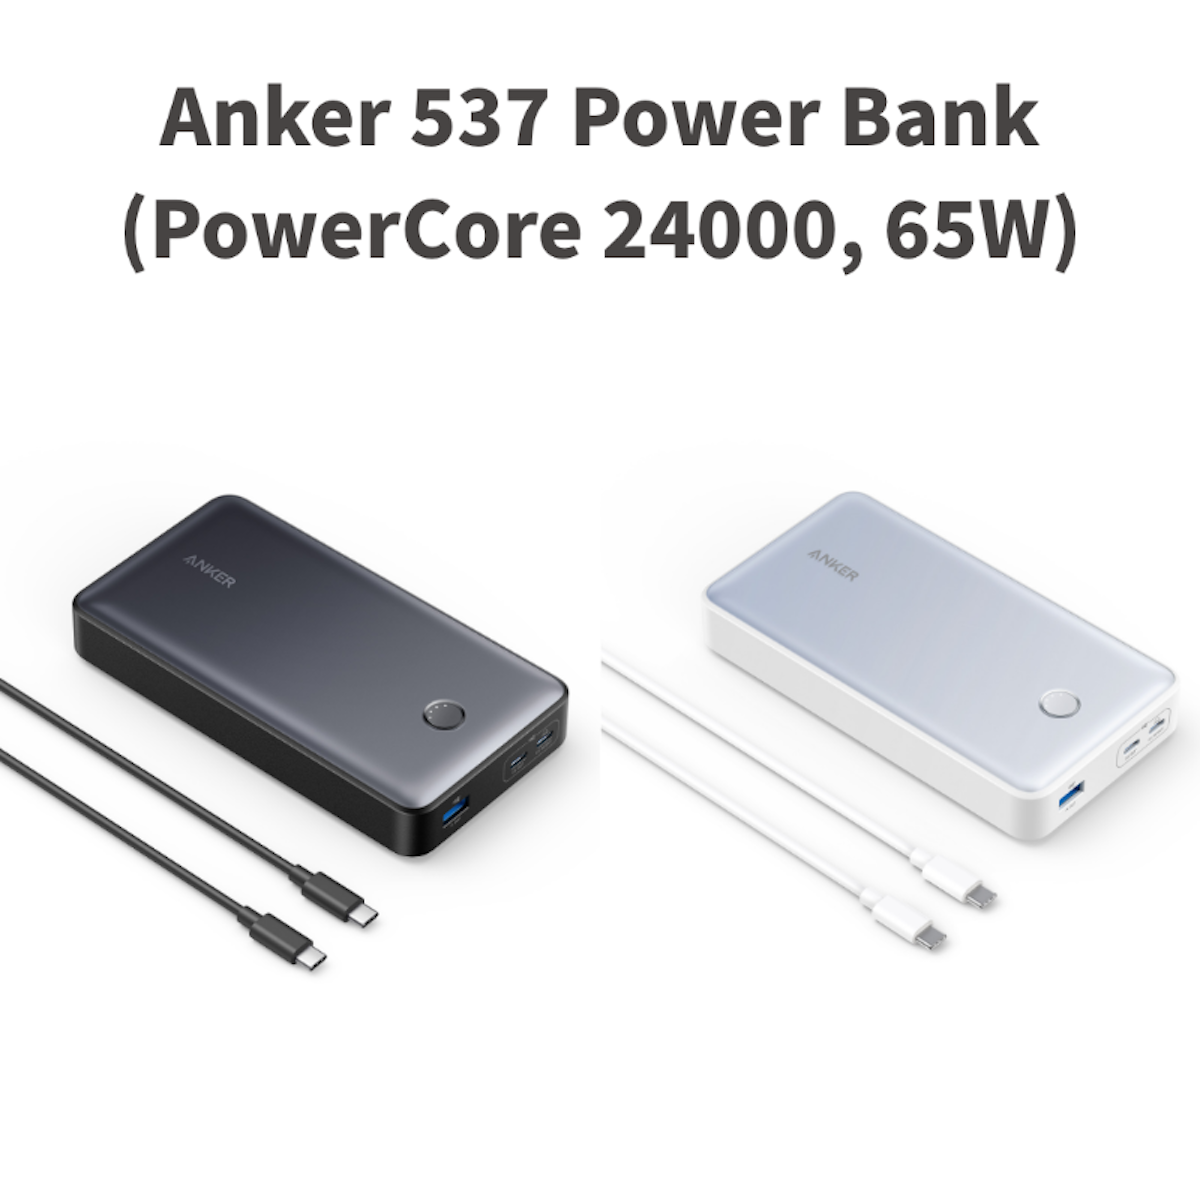 Anker 537 Power Bank（PowerCore 24000）が新発売 - iPhone Mania